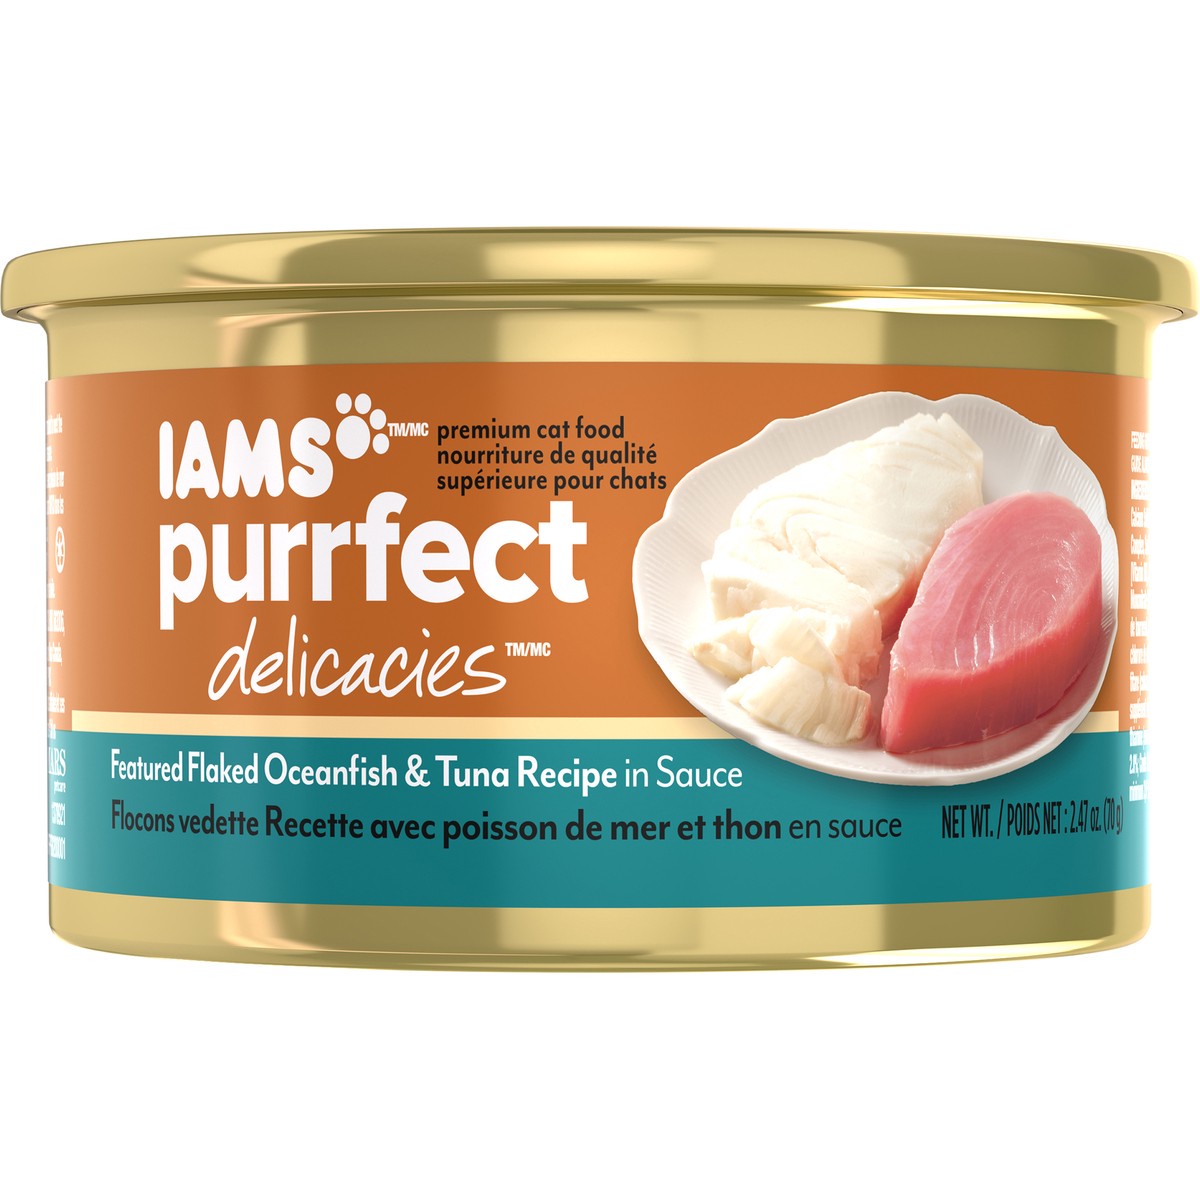 slide 2 of 12, Iams Purrfect Delicacies Premier Flaked Oceanfish & Tuna Recipe in Sauce Premium Cat Food 2.47 oz. Can, 2.47 oz